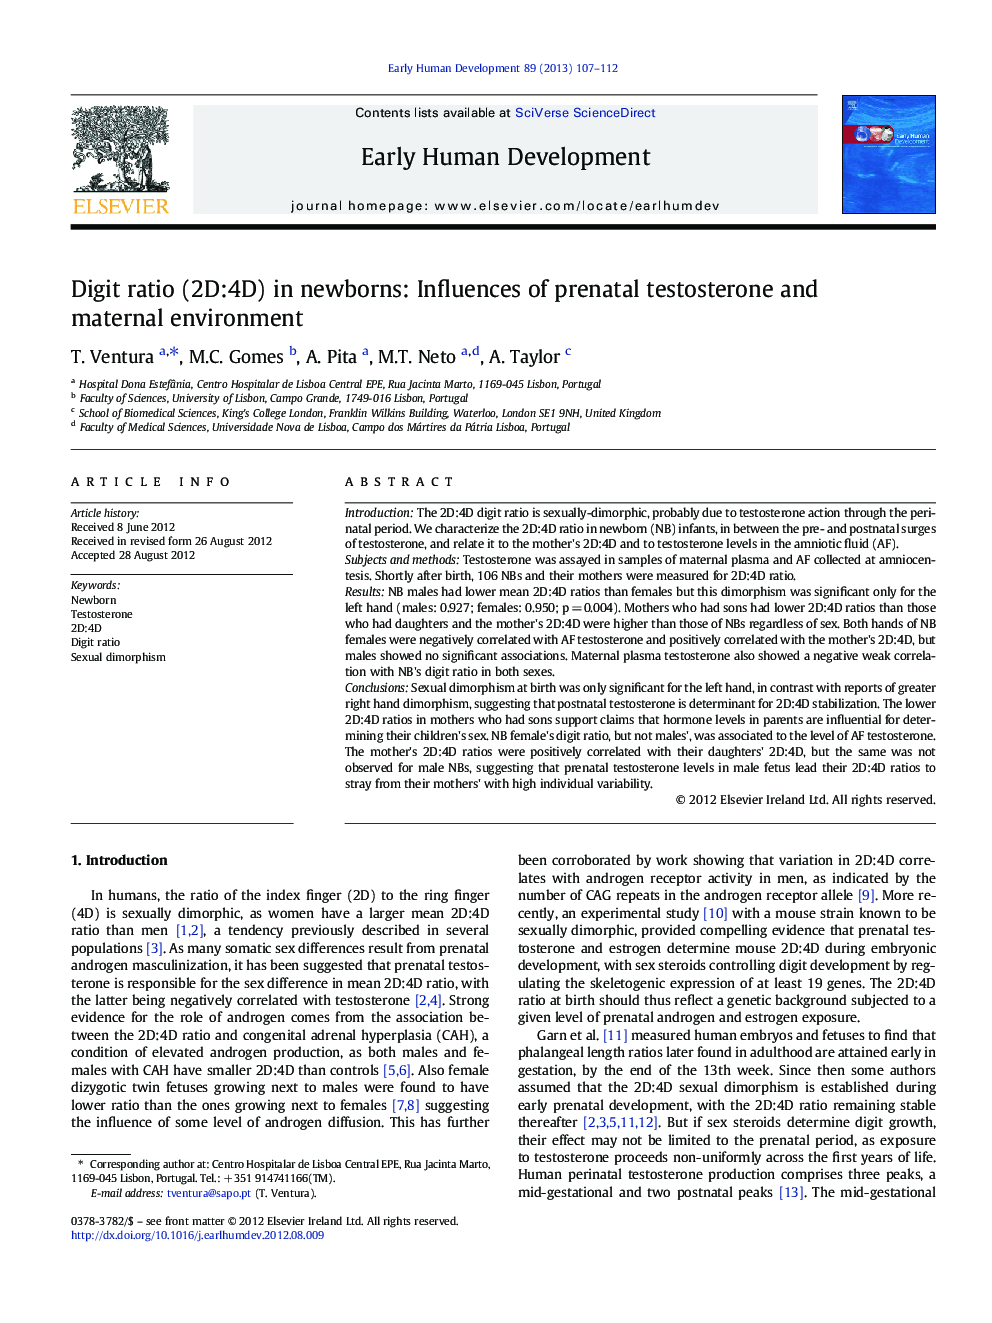 Digit ratio (2D:4D) in newborns: Influences of prenatal testosterone and maternal environment